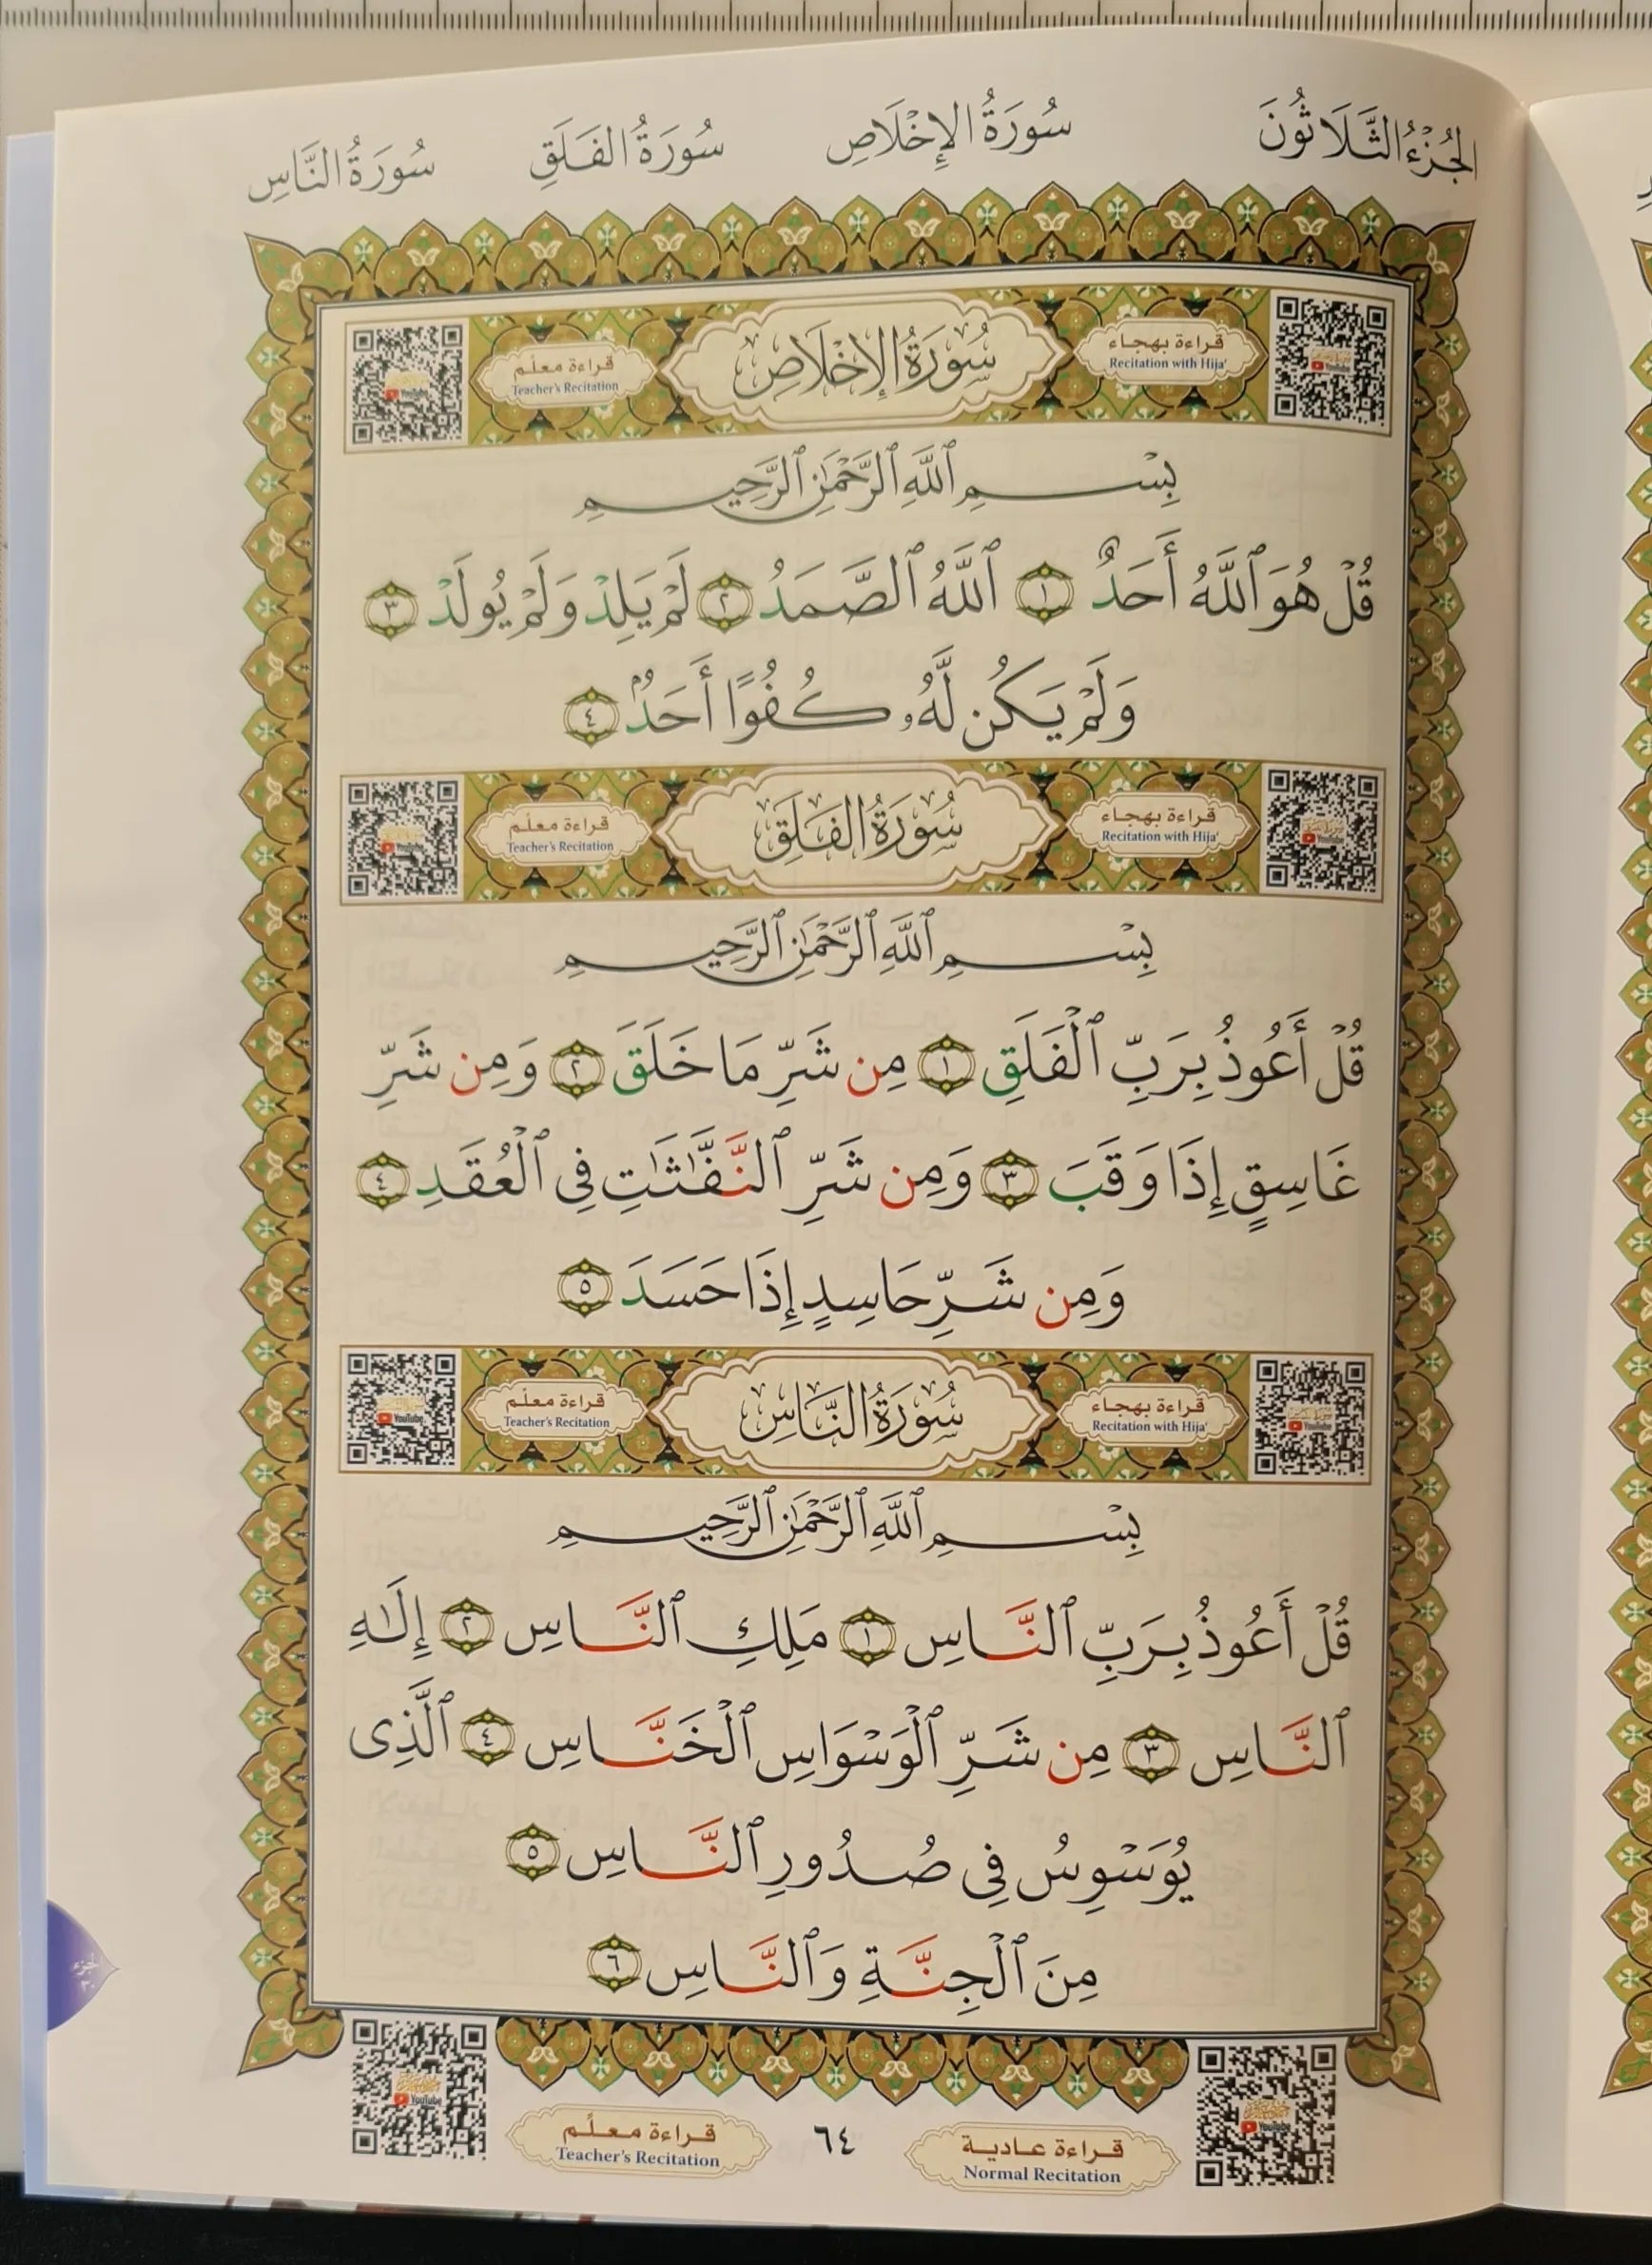 Das letzte Zehntel des Koran - Nourania Kleinformat - Al-Ouchrou Al-akhir (Juzz Qad Sami-a) 